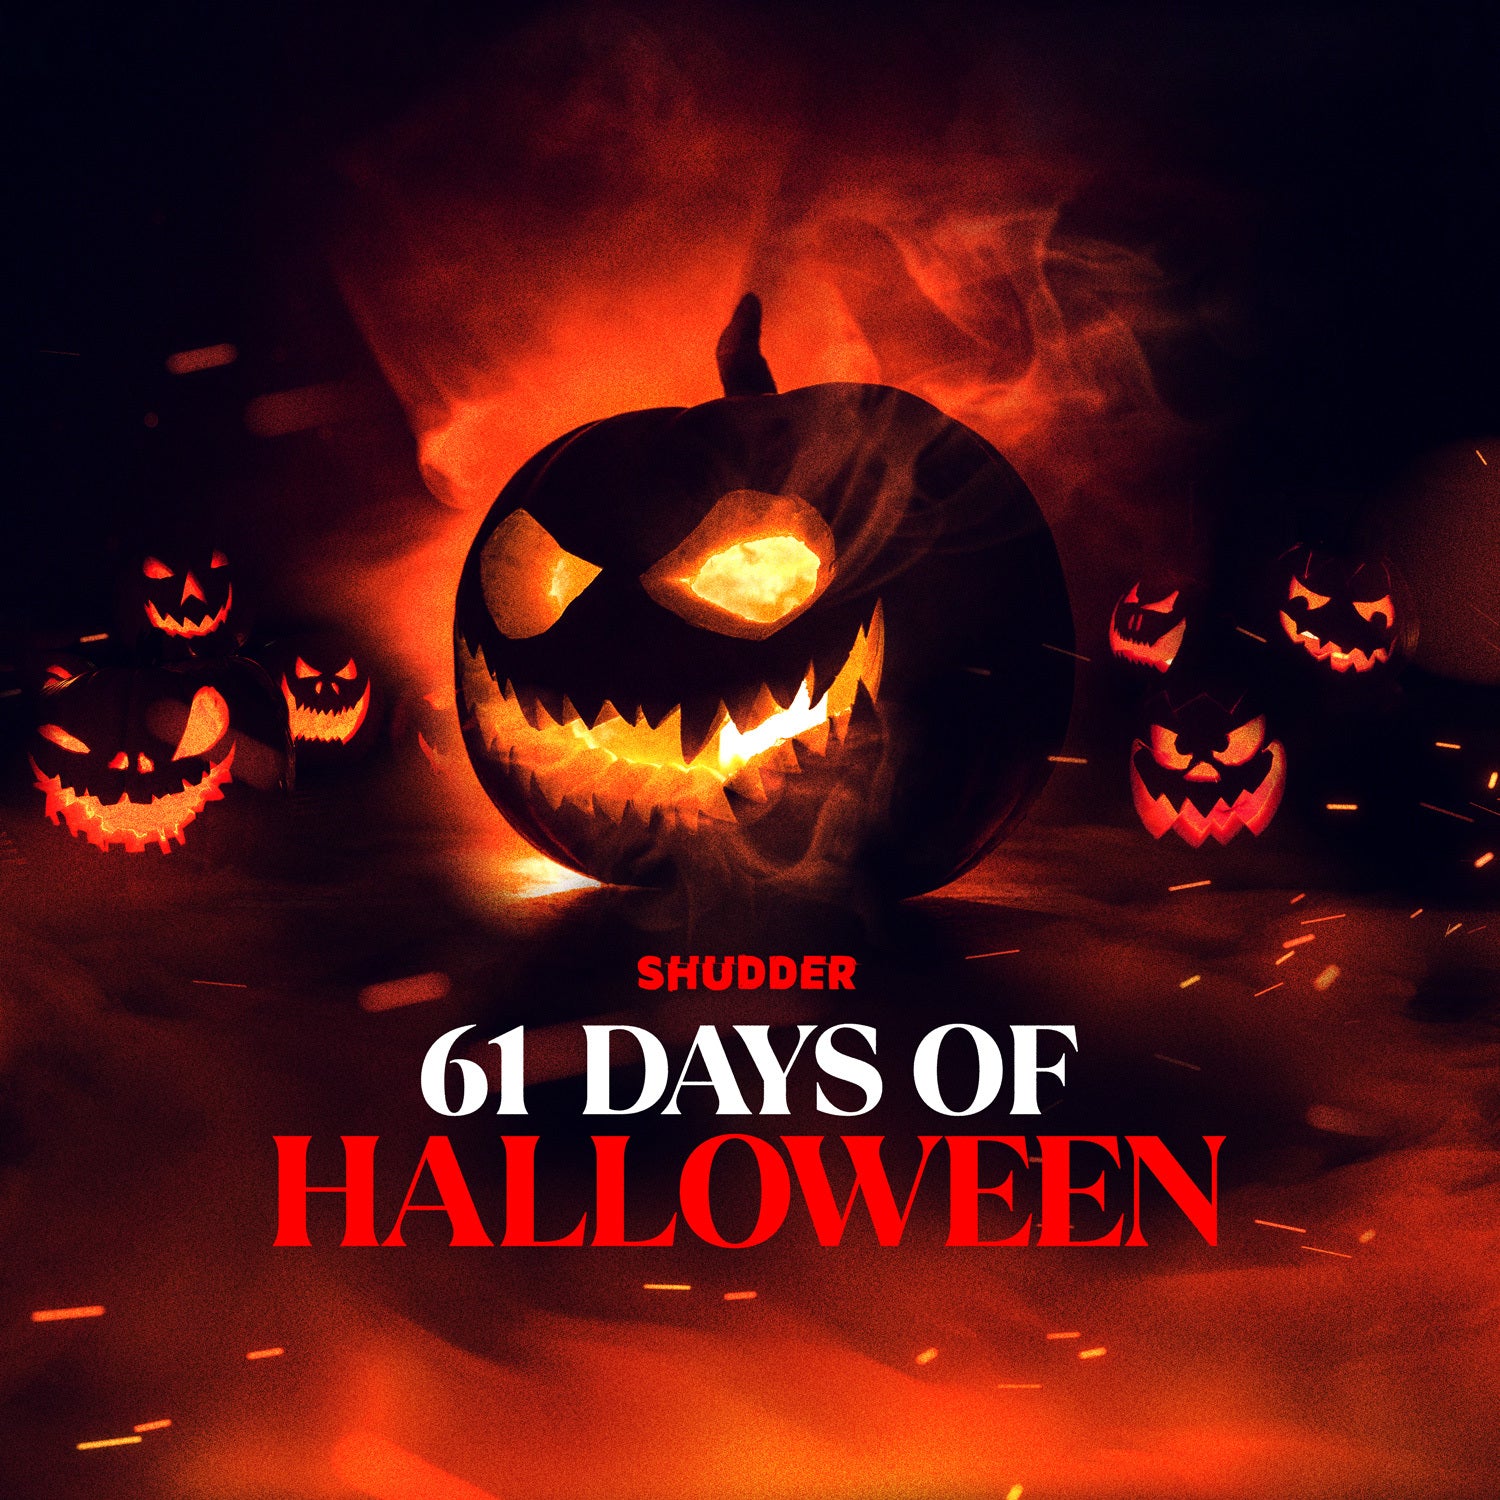 Shudder Officially Kicks Off Spooky Season with '61 Days of Halloween'